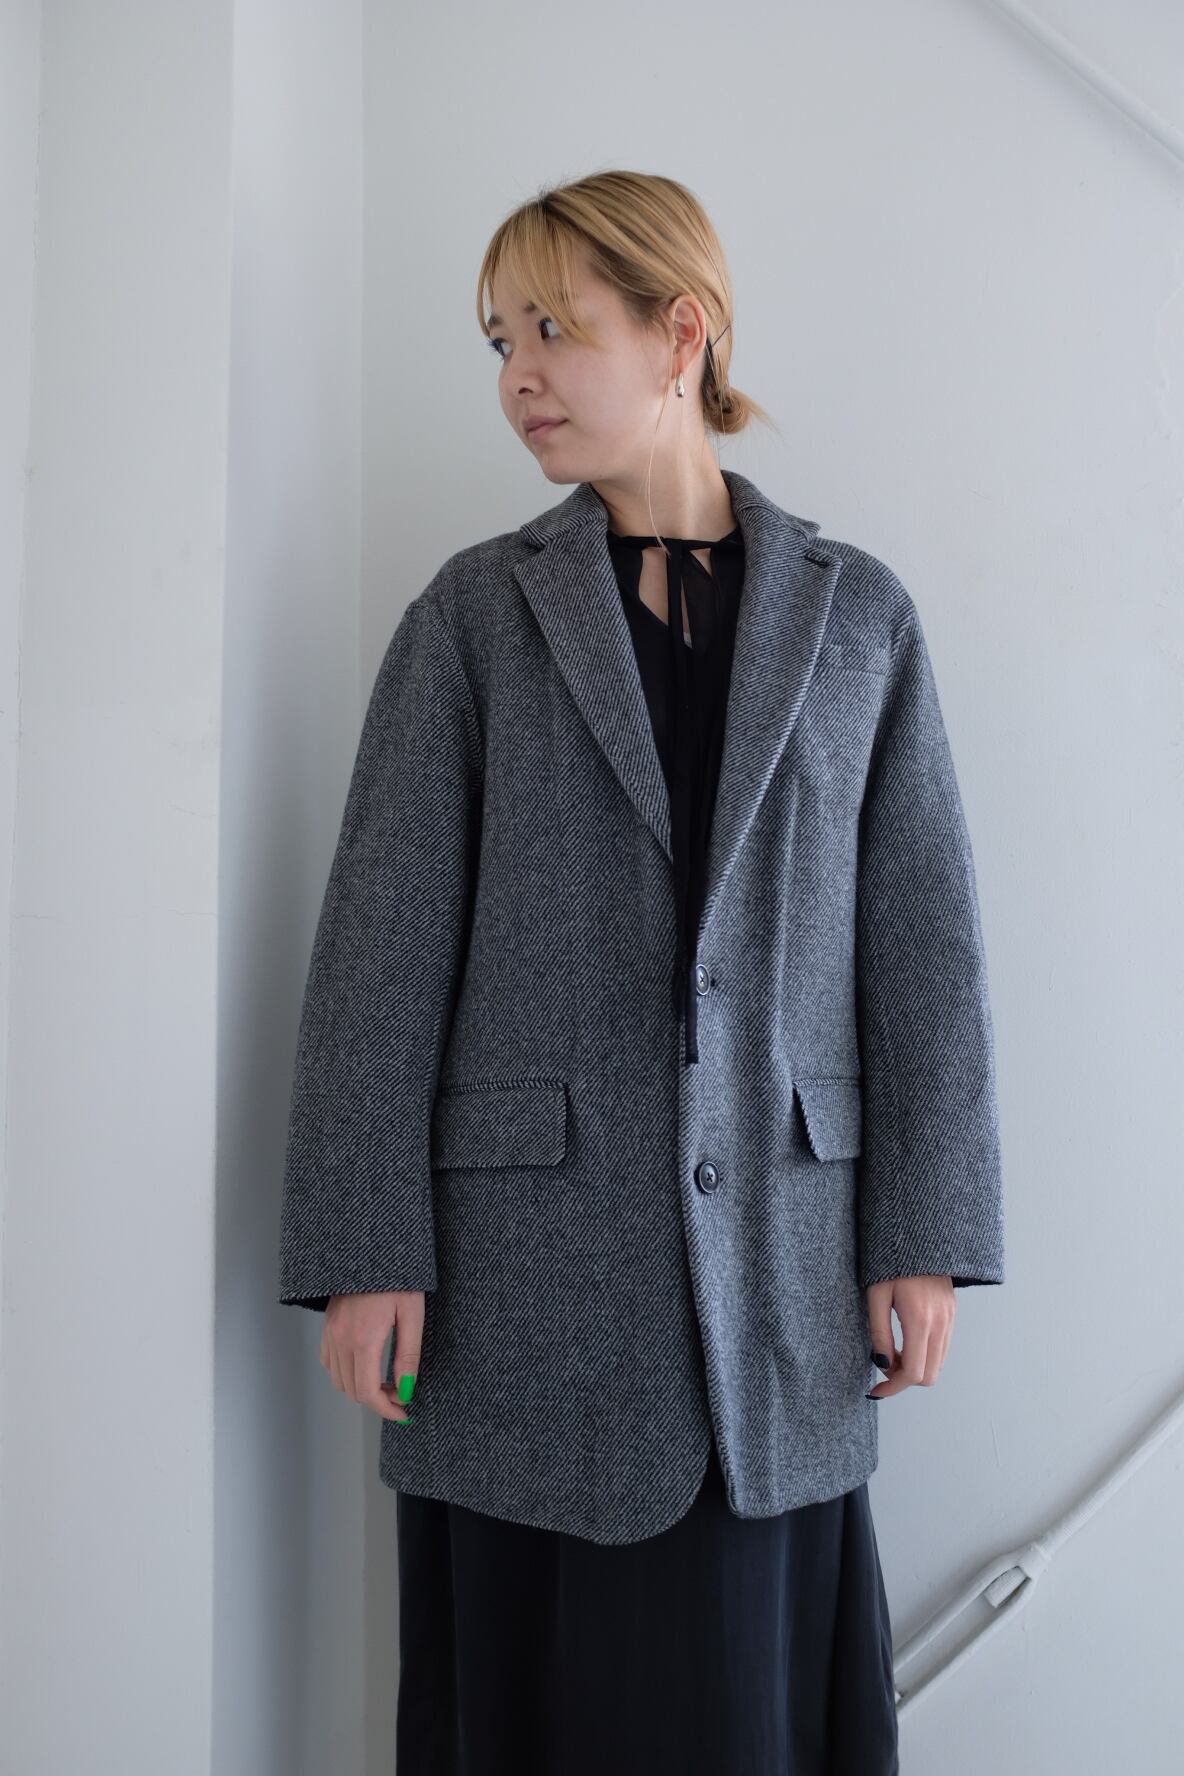 [KIJI]river jacket coat womens | YES-姫路の美容院と服のお店YES(イエス)です。 powered by BASE